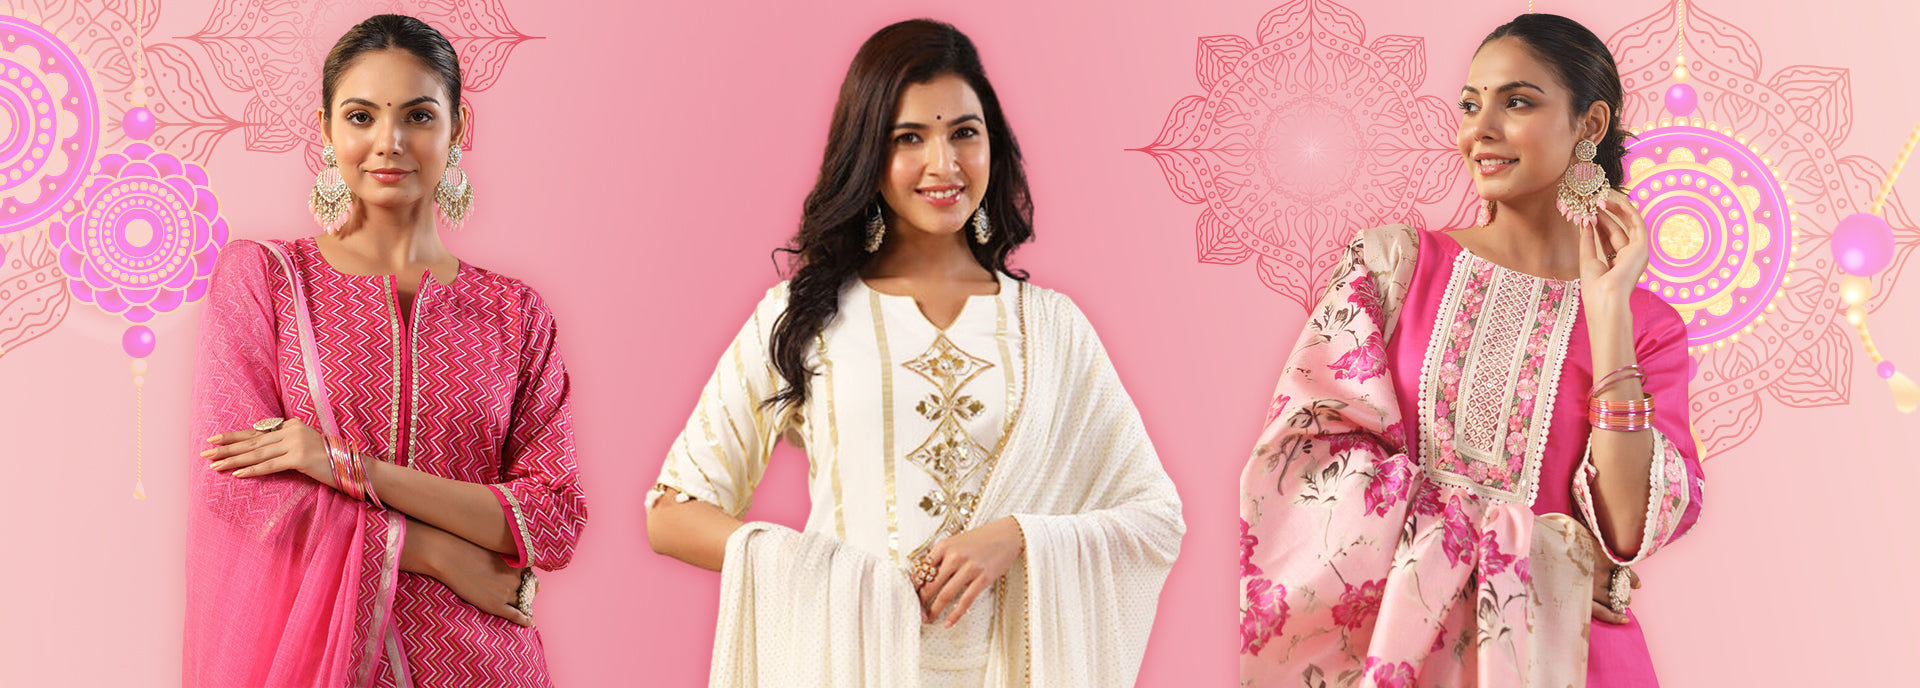 Redefine Rakshabandhan Gifting with Exquisite Ethnic Suit Sets